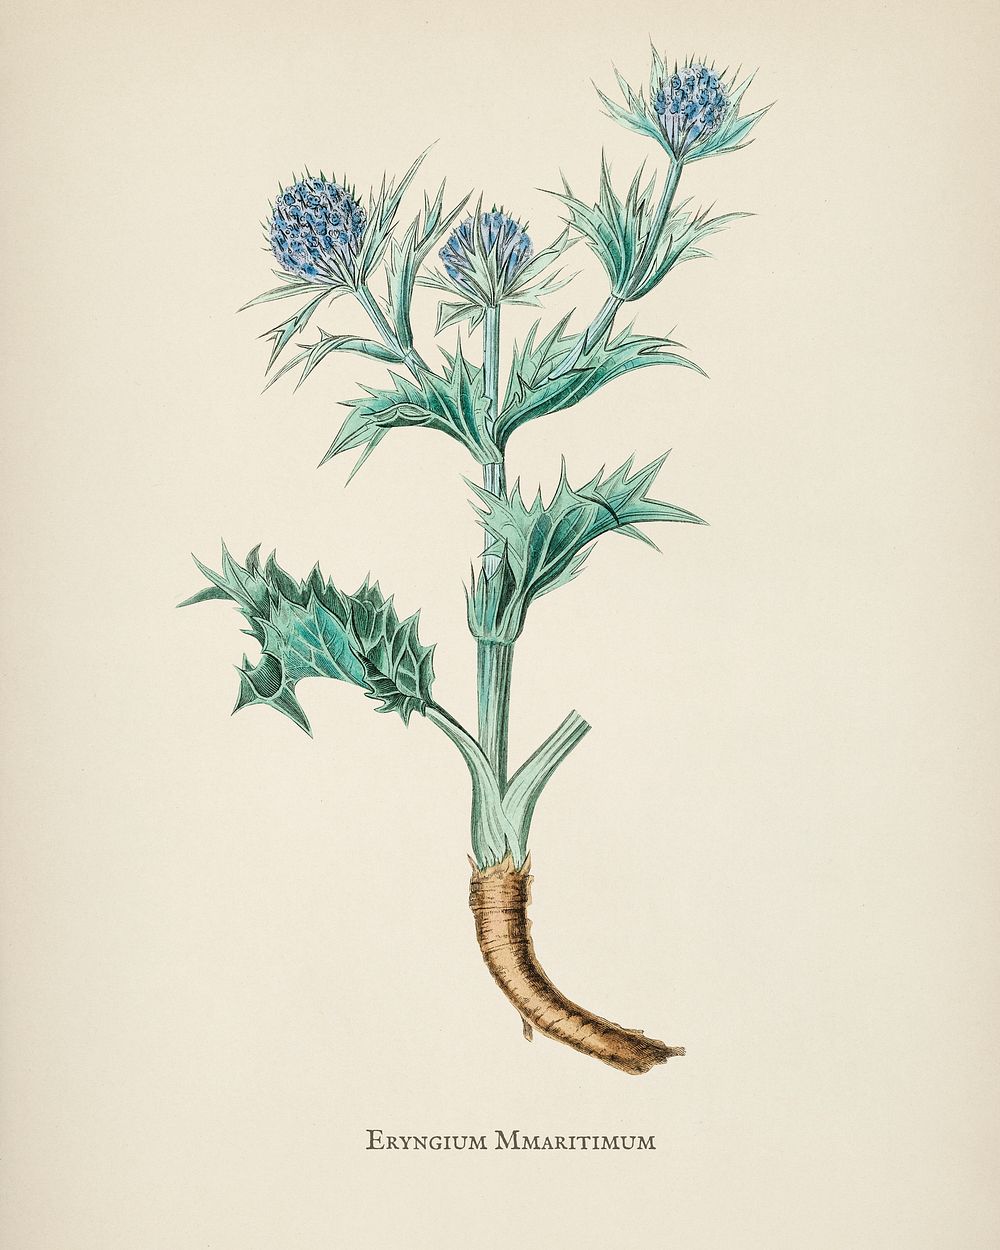 The sea holly (Eryngium mmaritimum) illustration from Medical Botany (1836) by John Stephenson and James Morss Churchill.